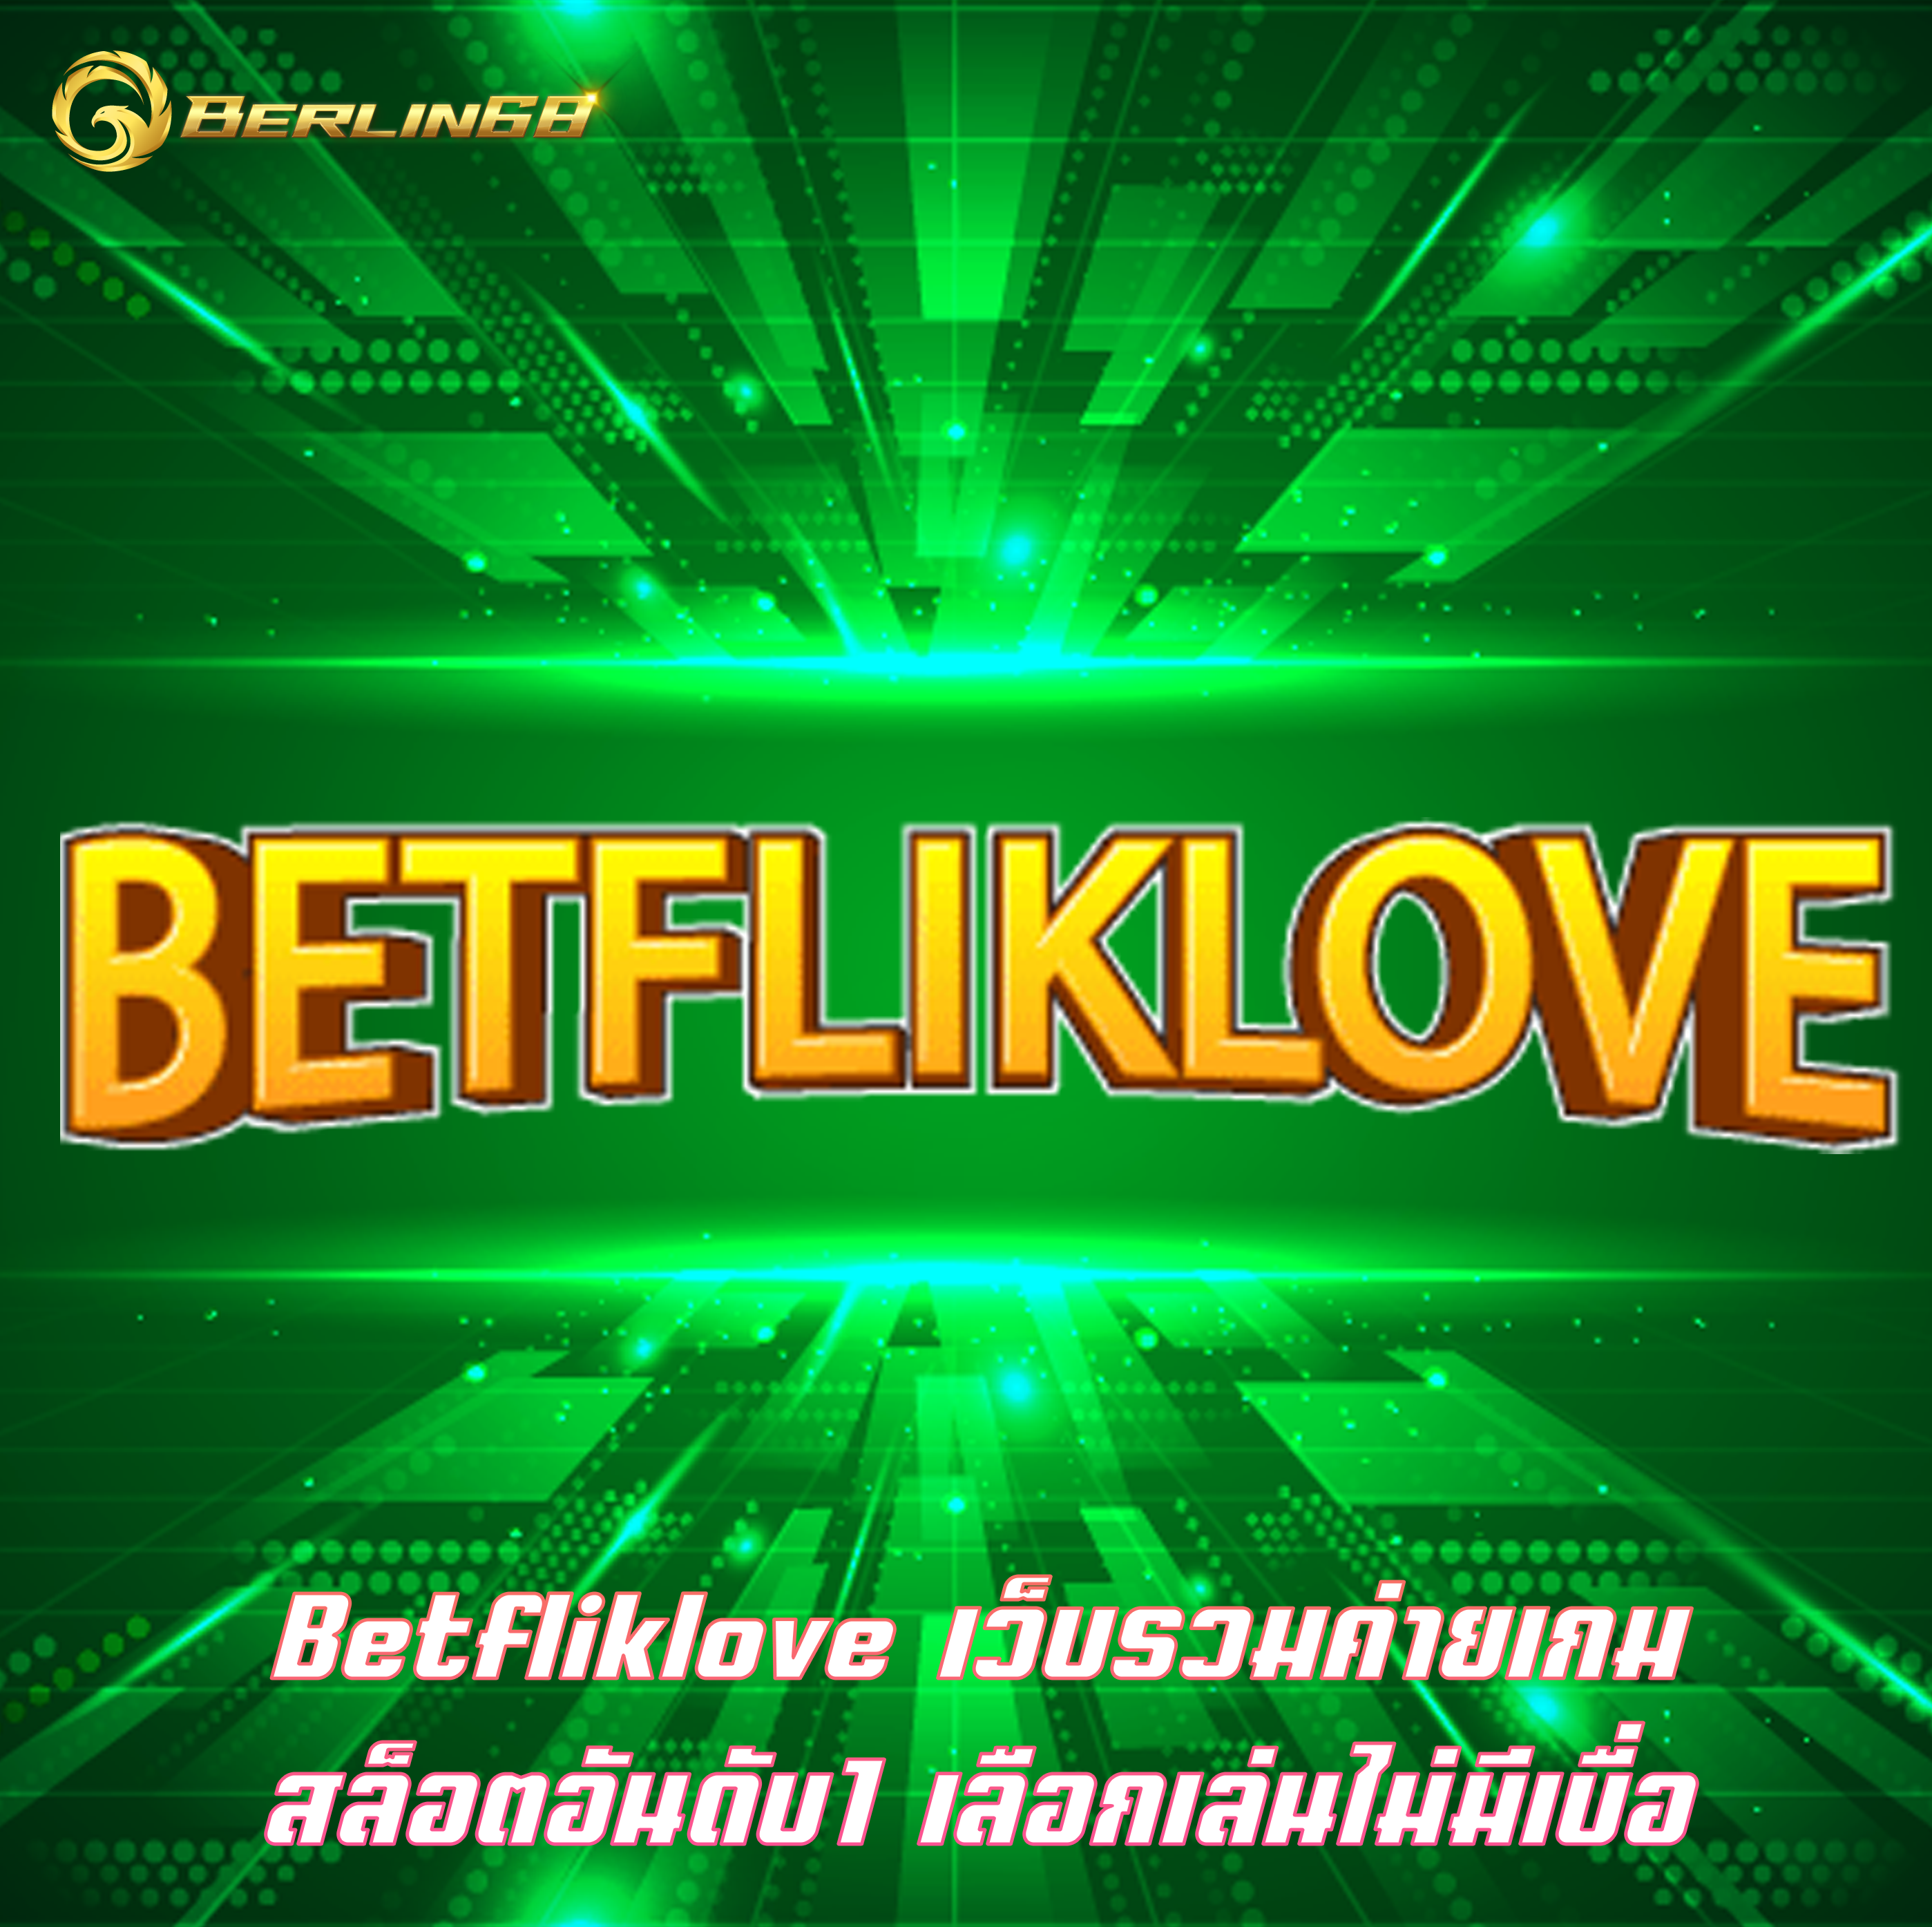 Betfliklove เว็บรวมค่ายเกมสล็อตอันดับ1 เลือกเล่นไม่มีเบื่อ